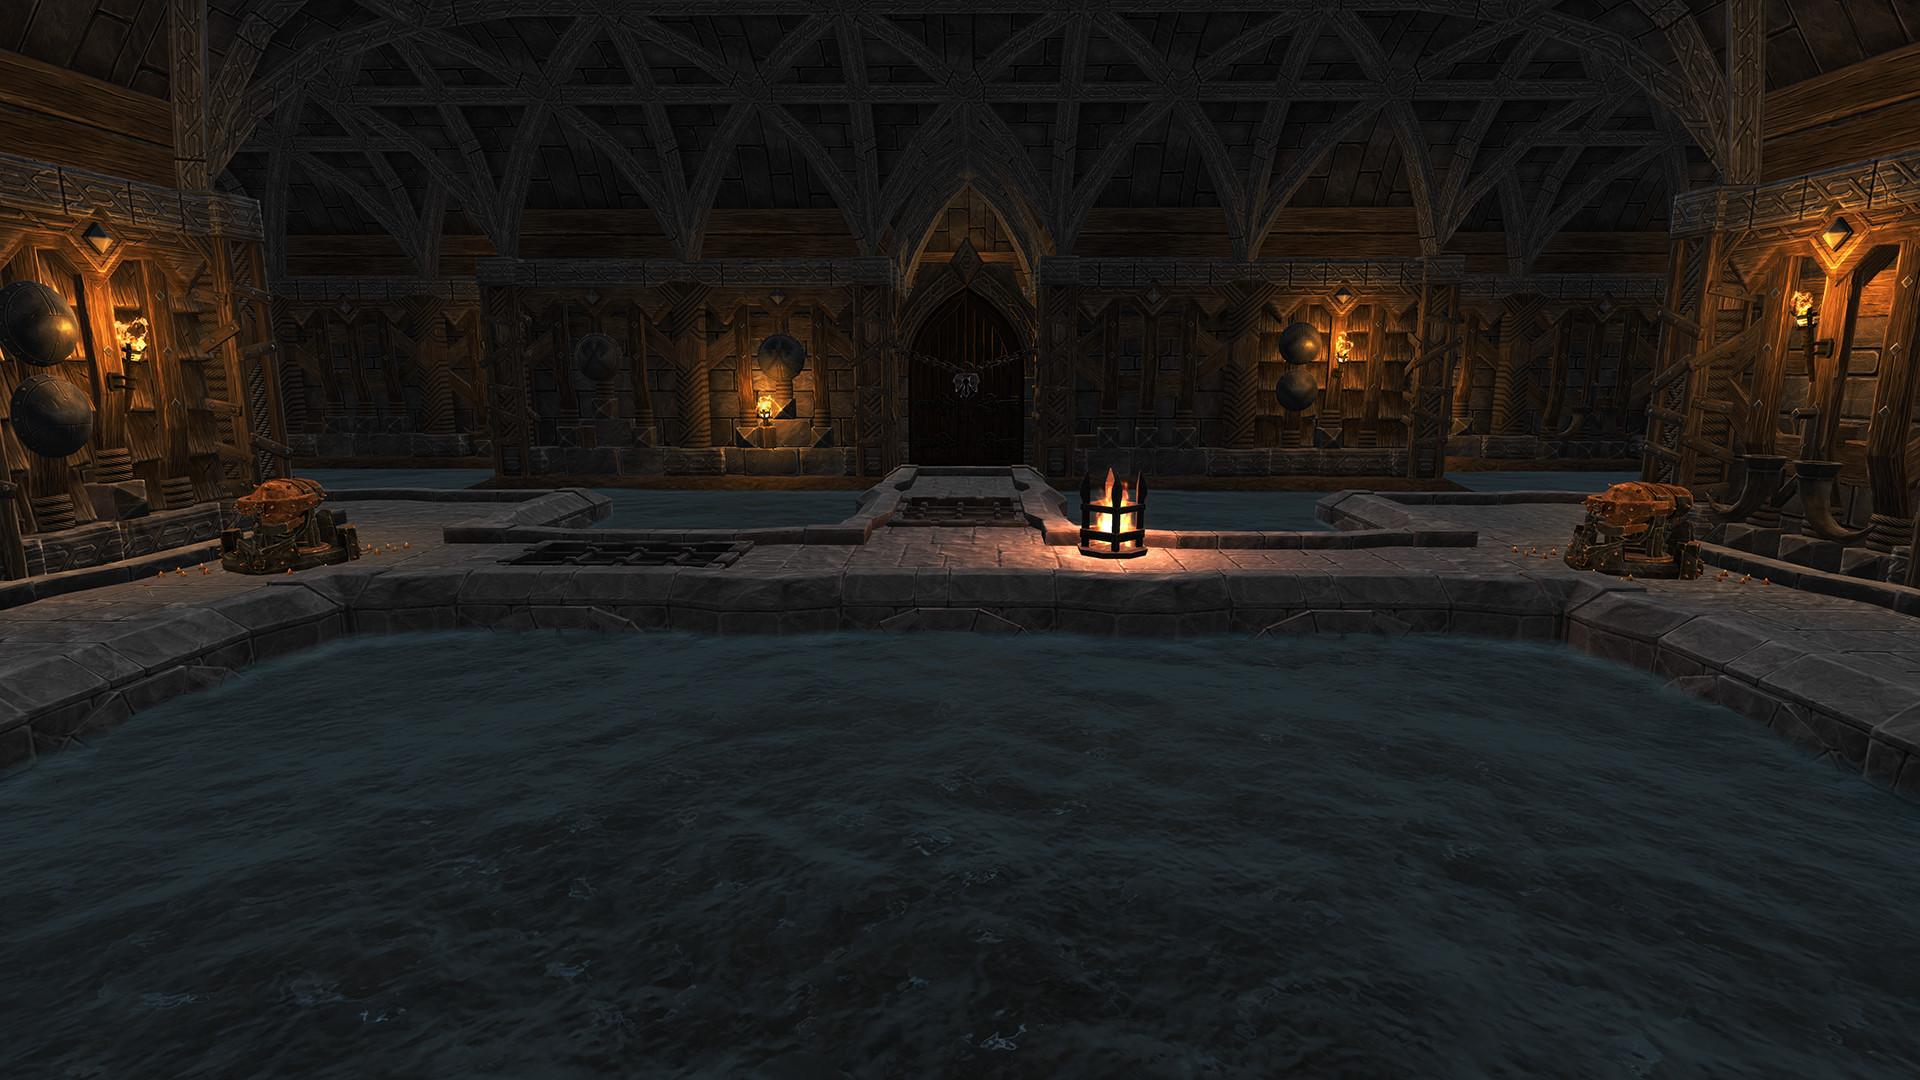 Screenshot №8 from game War for the Overworld